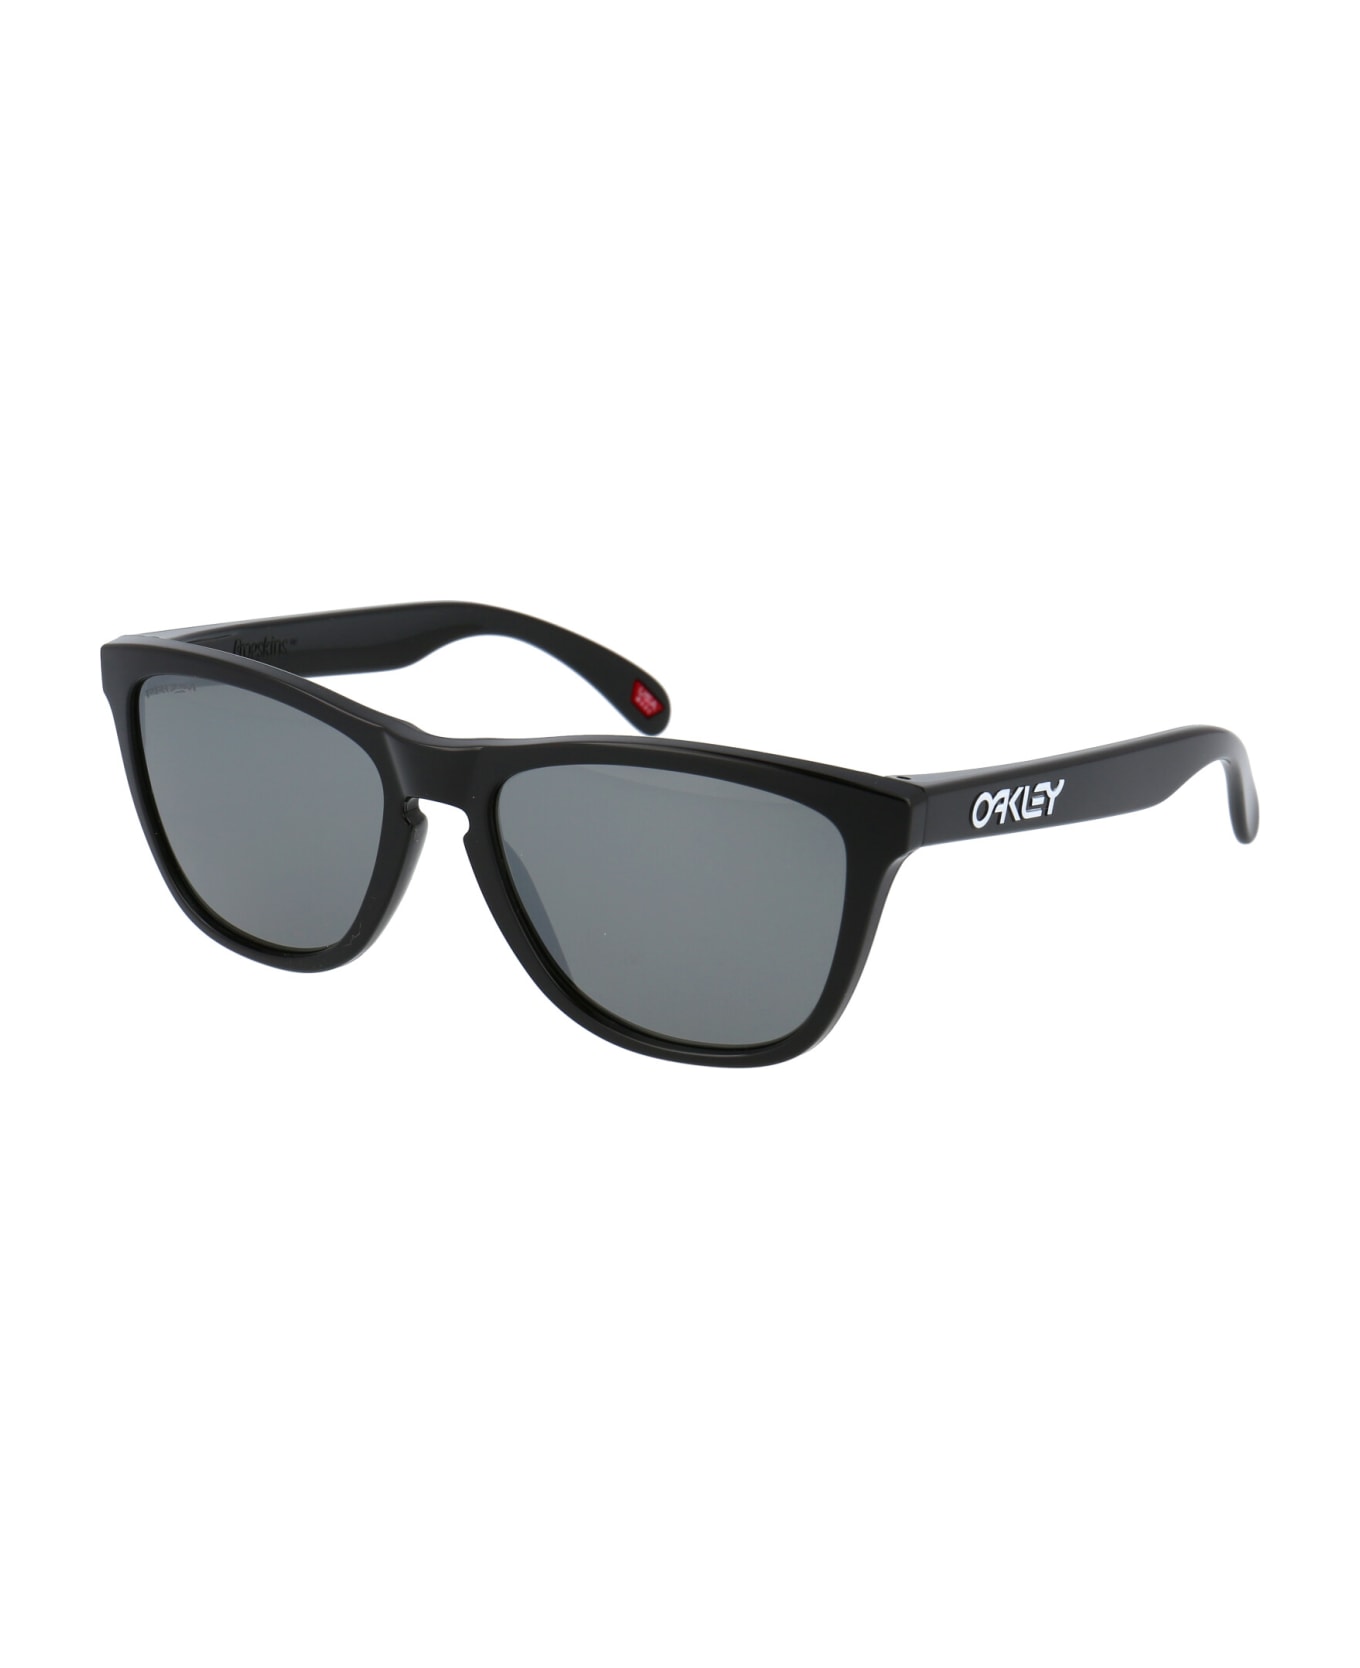 Oakley Frogskins Sunglasses - 9013C4 POLISHED BLACK サングラス